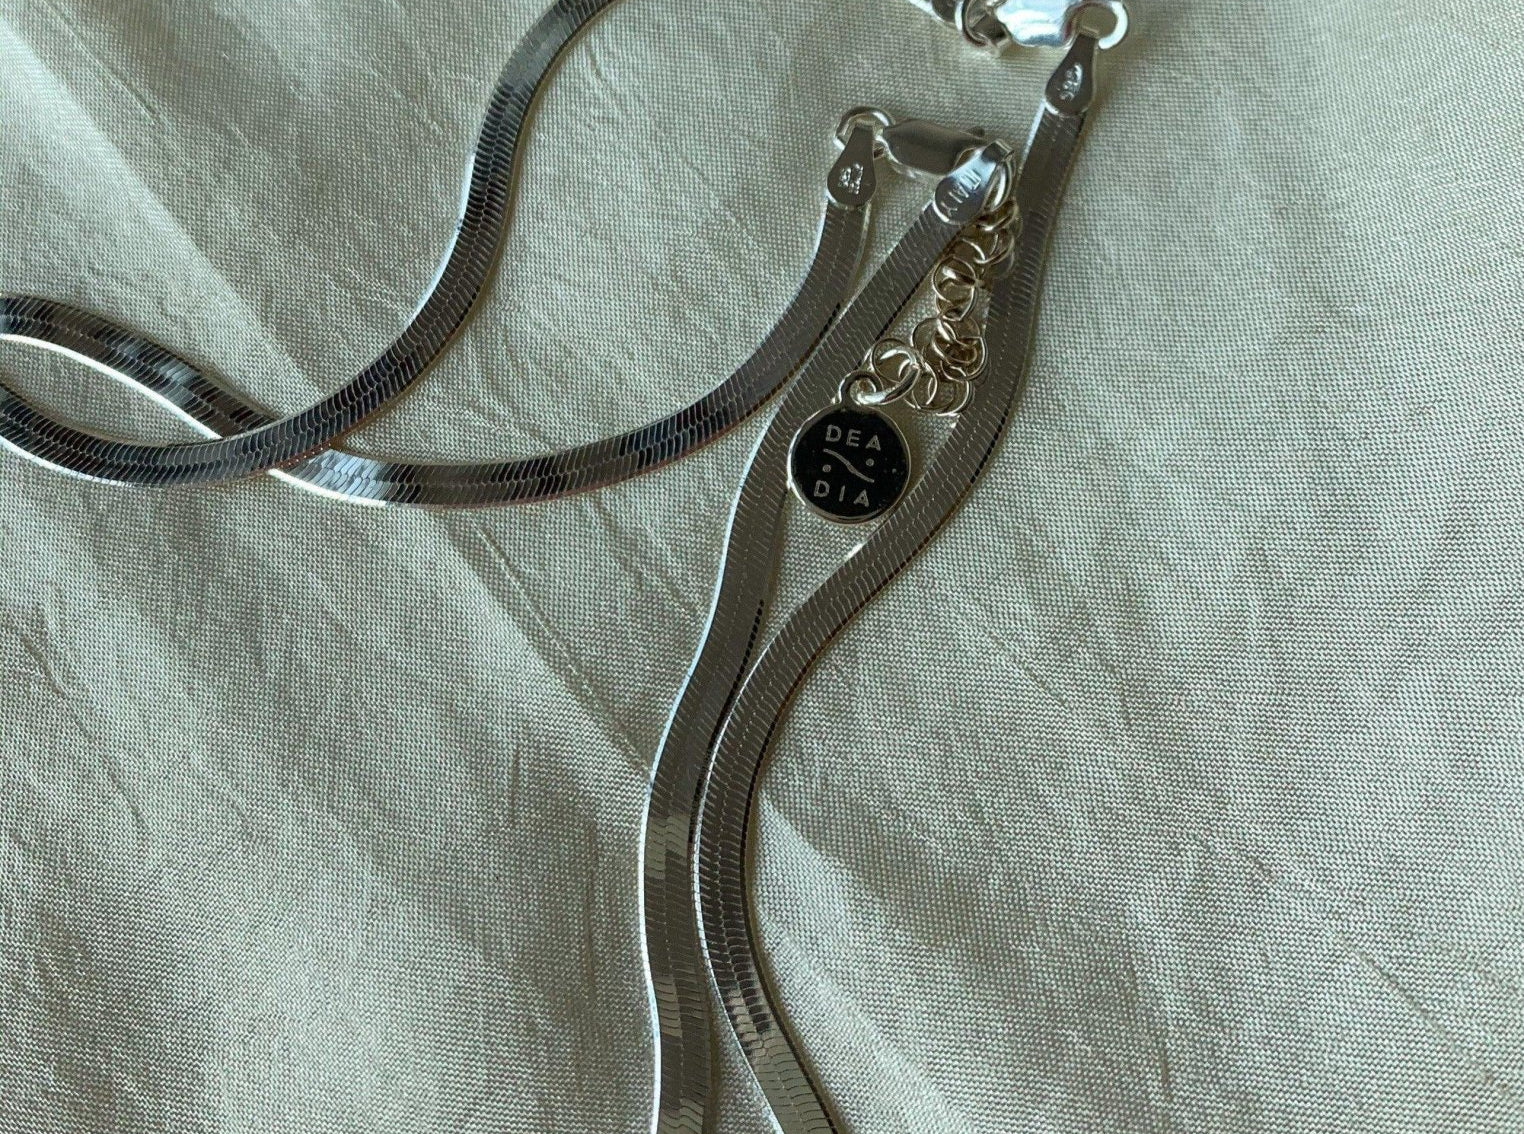 Slinky Silver Herringbone Chain Necklace - Herringbone Silver Chain - Dea Dia